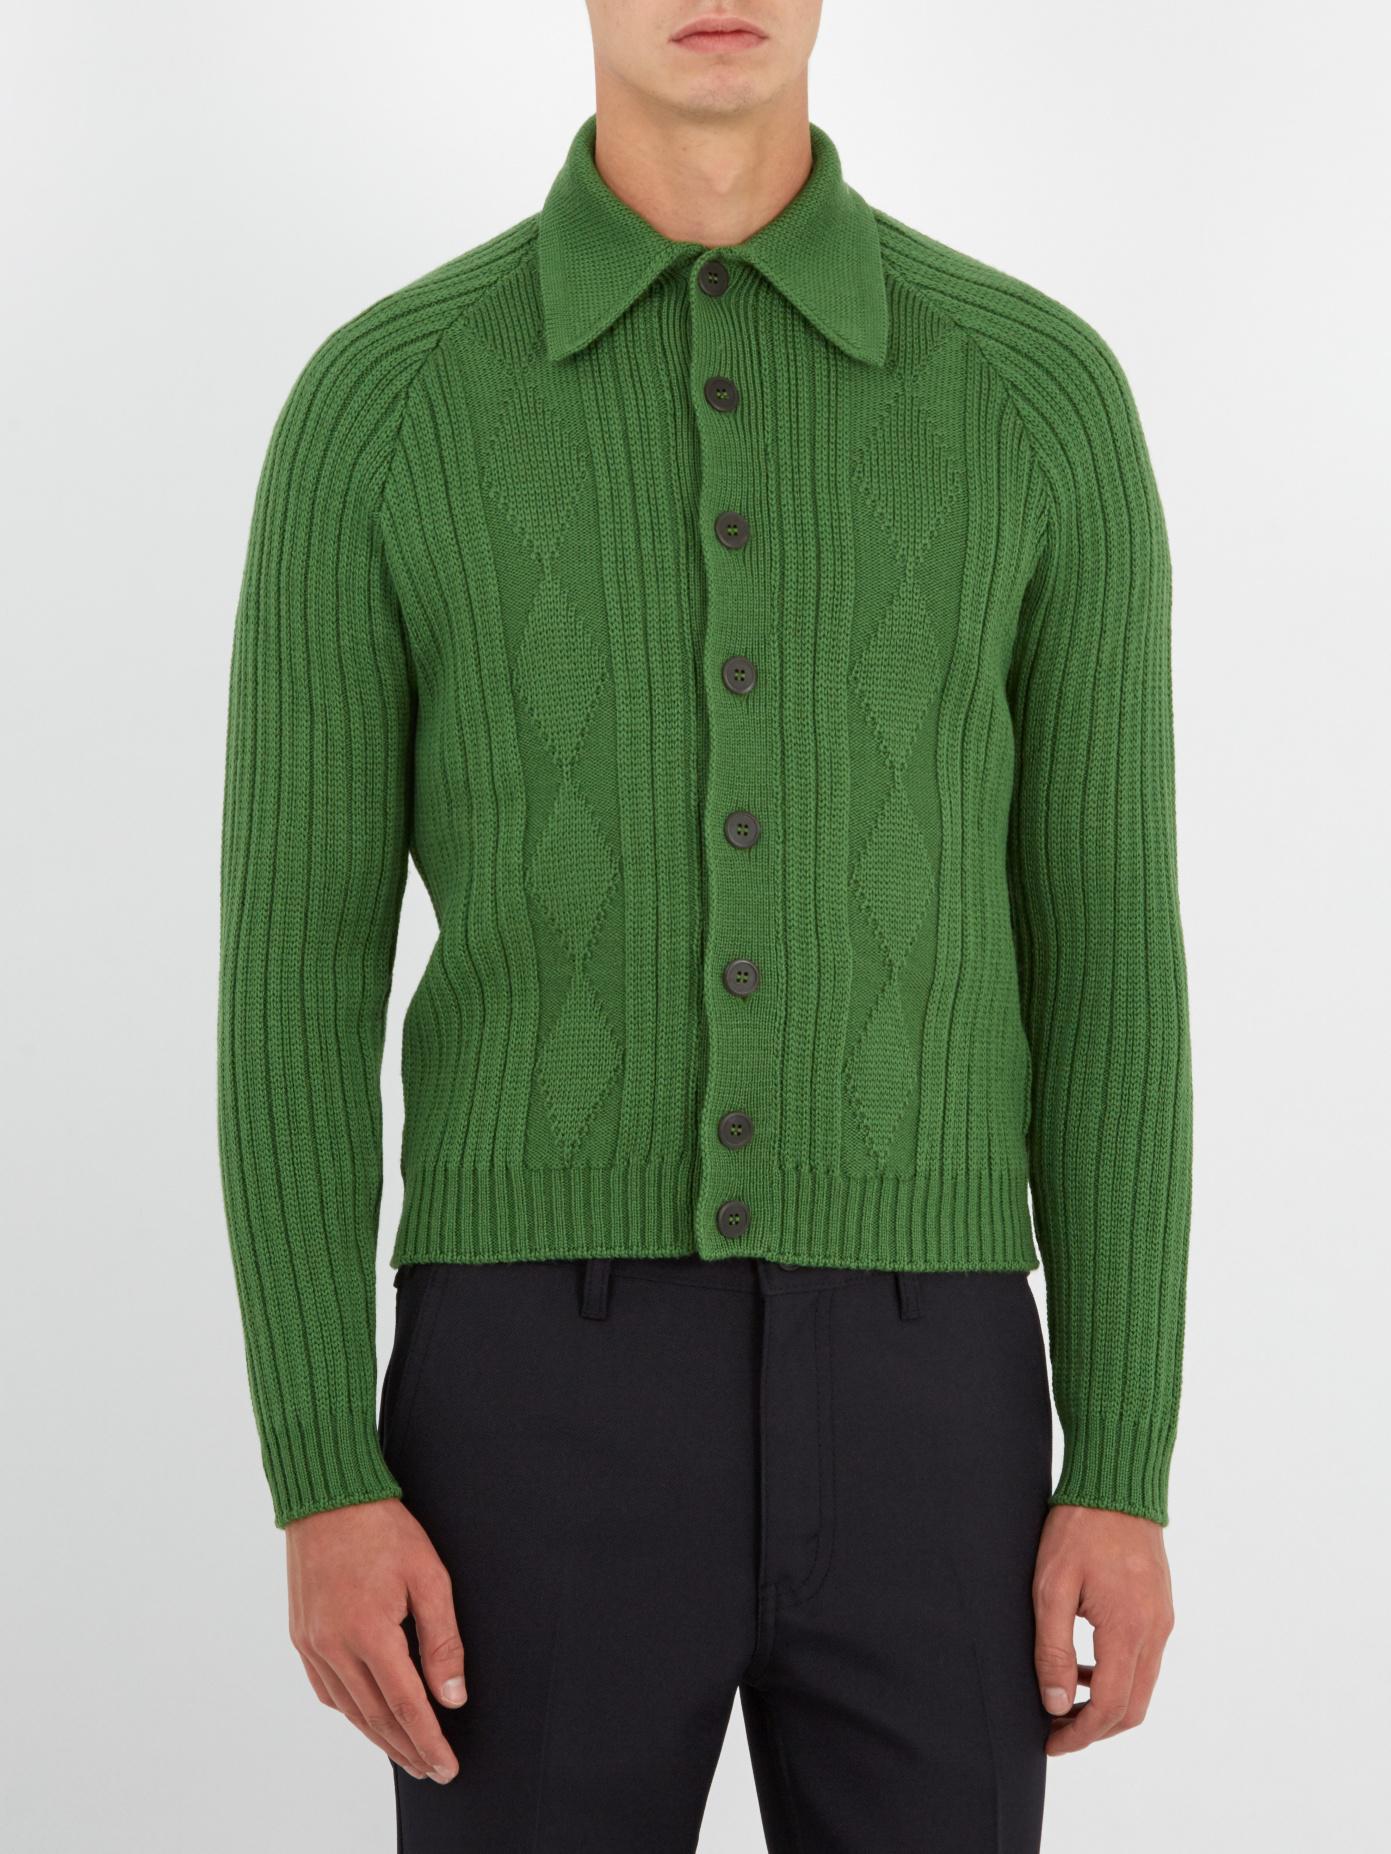 Prada Point-collar Ribbed-knit Wool Cardigan in Green for Men - Lyst